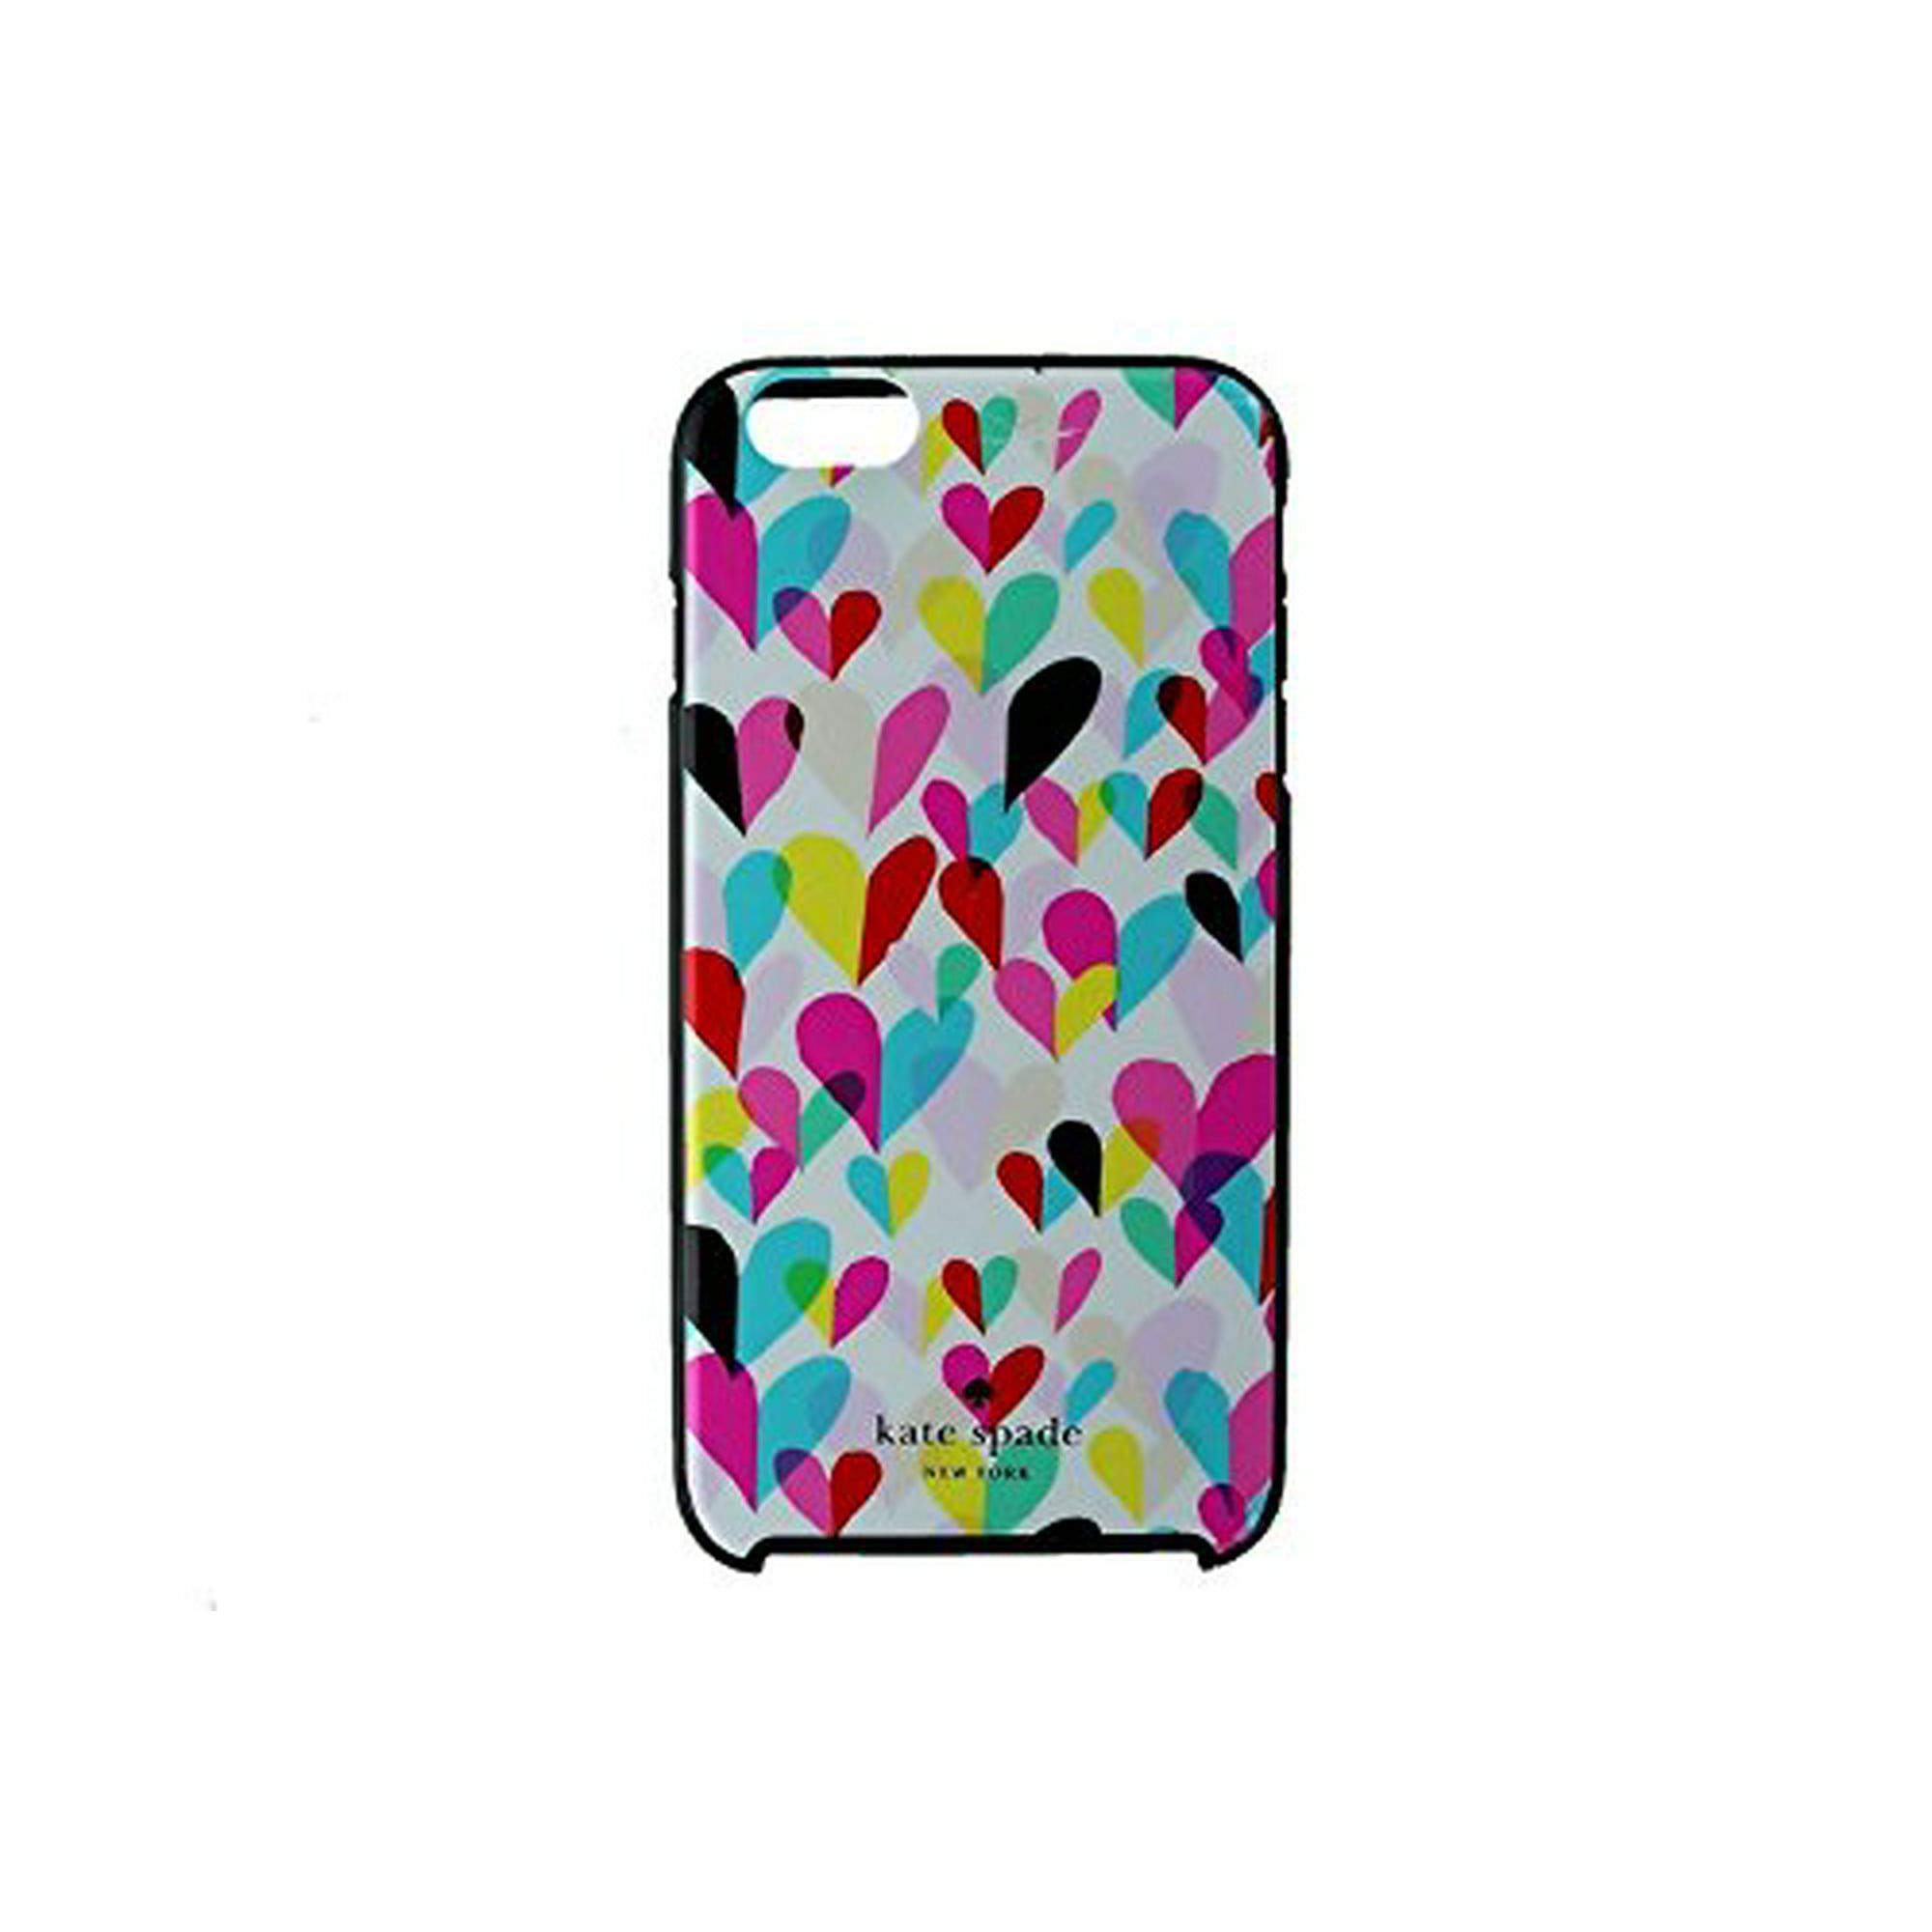 Kate Spade New York - Hybrid Hardshell Case for iPhone 6 Plus/6s Plus -  Confetti Heart (Rainbow) | Walmart Canada